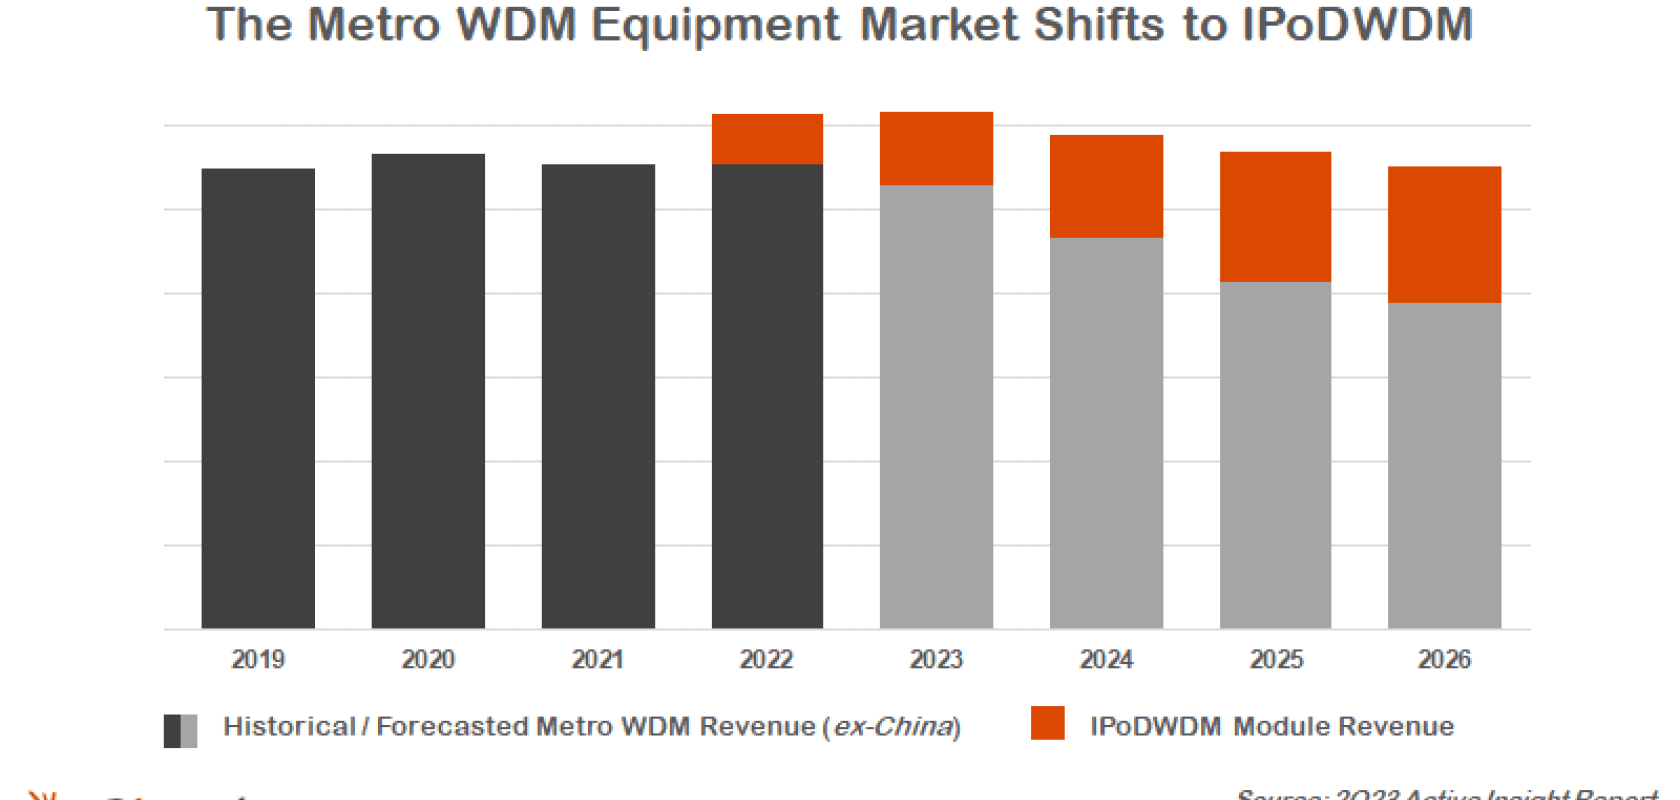 The metro WDM equipment market shifts to IPoDWDM